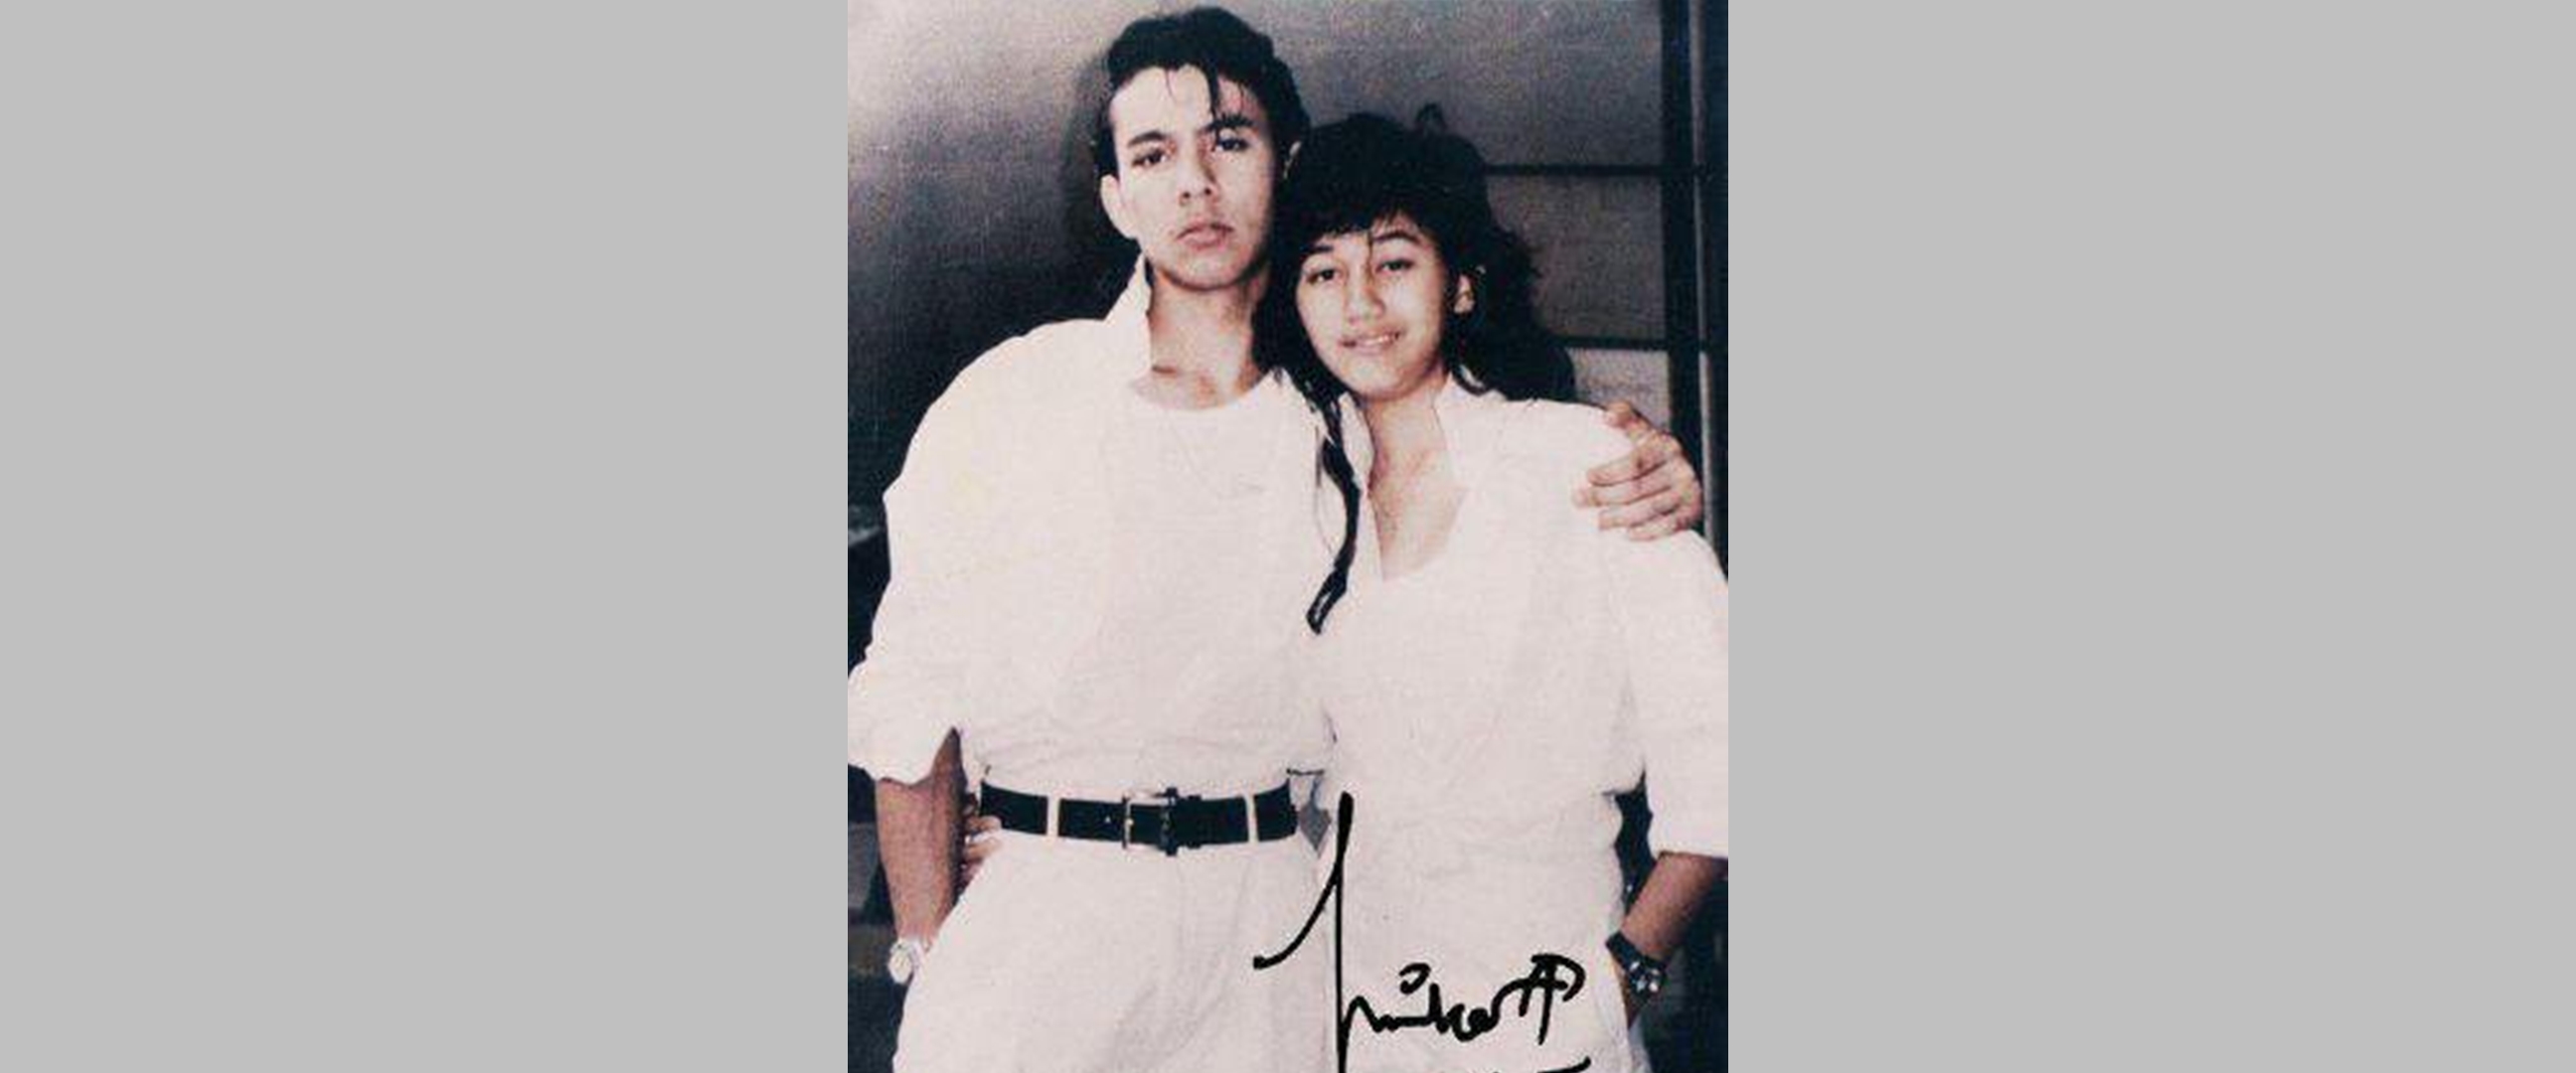 Nostalgia romansa Ryan Hidayat dan Nike Ardilla sebagai pasangan ikonik era 90-an, intip 11 potretnya